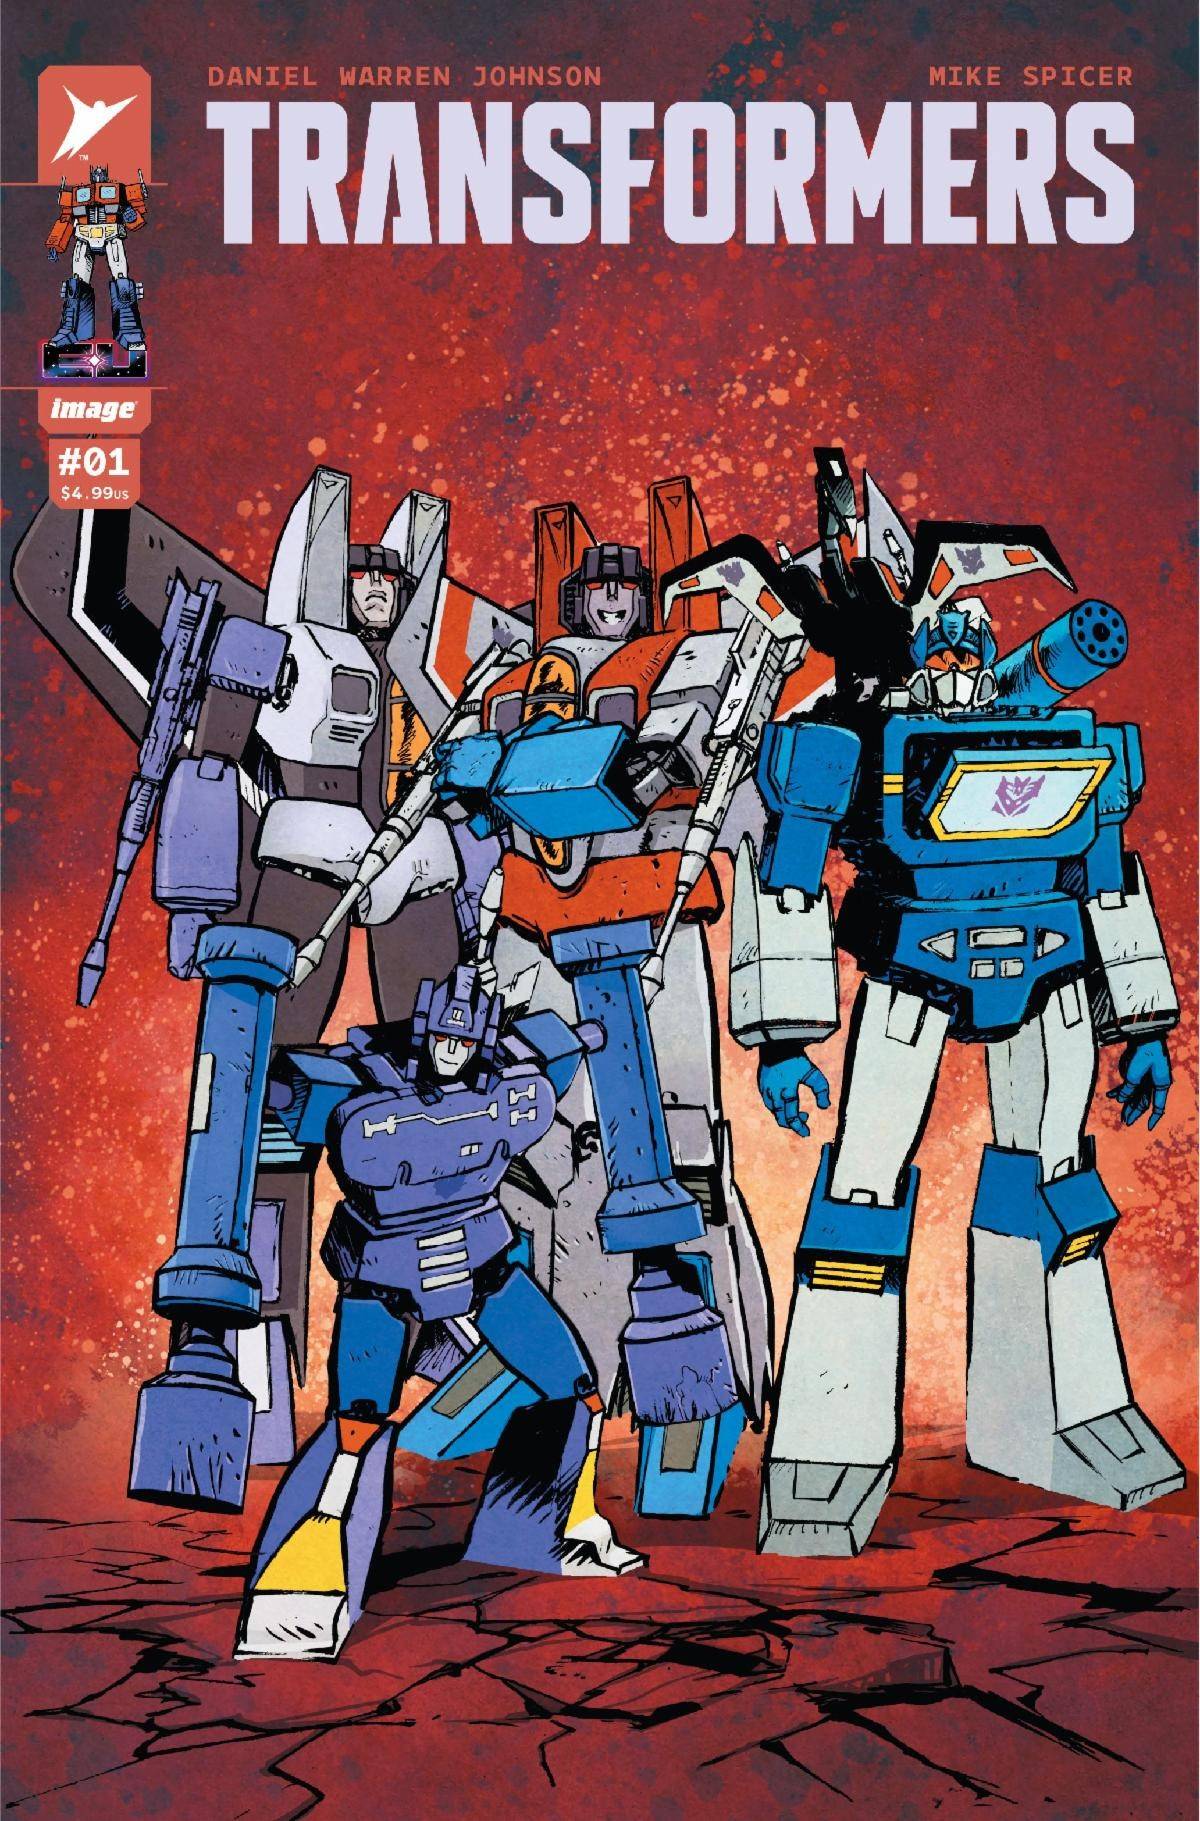 Transformers #1 IMAGE C Warren Johnson & Spicer 10/04/2023 | BD Cosmos